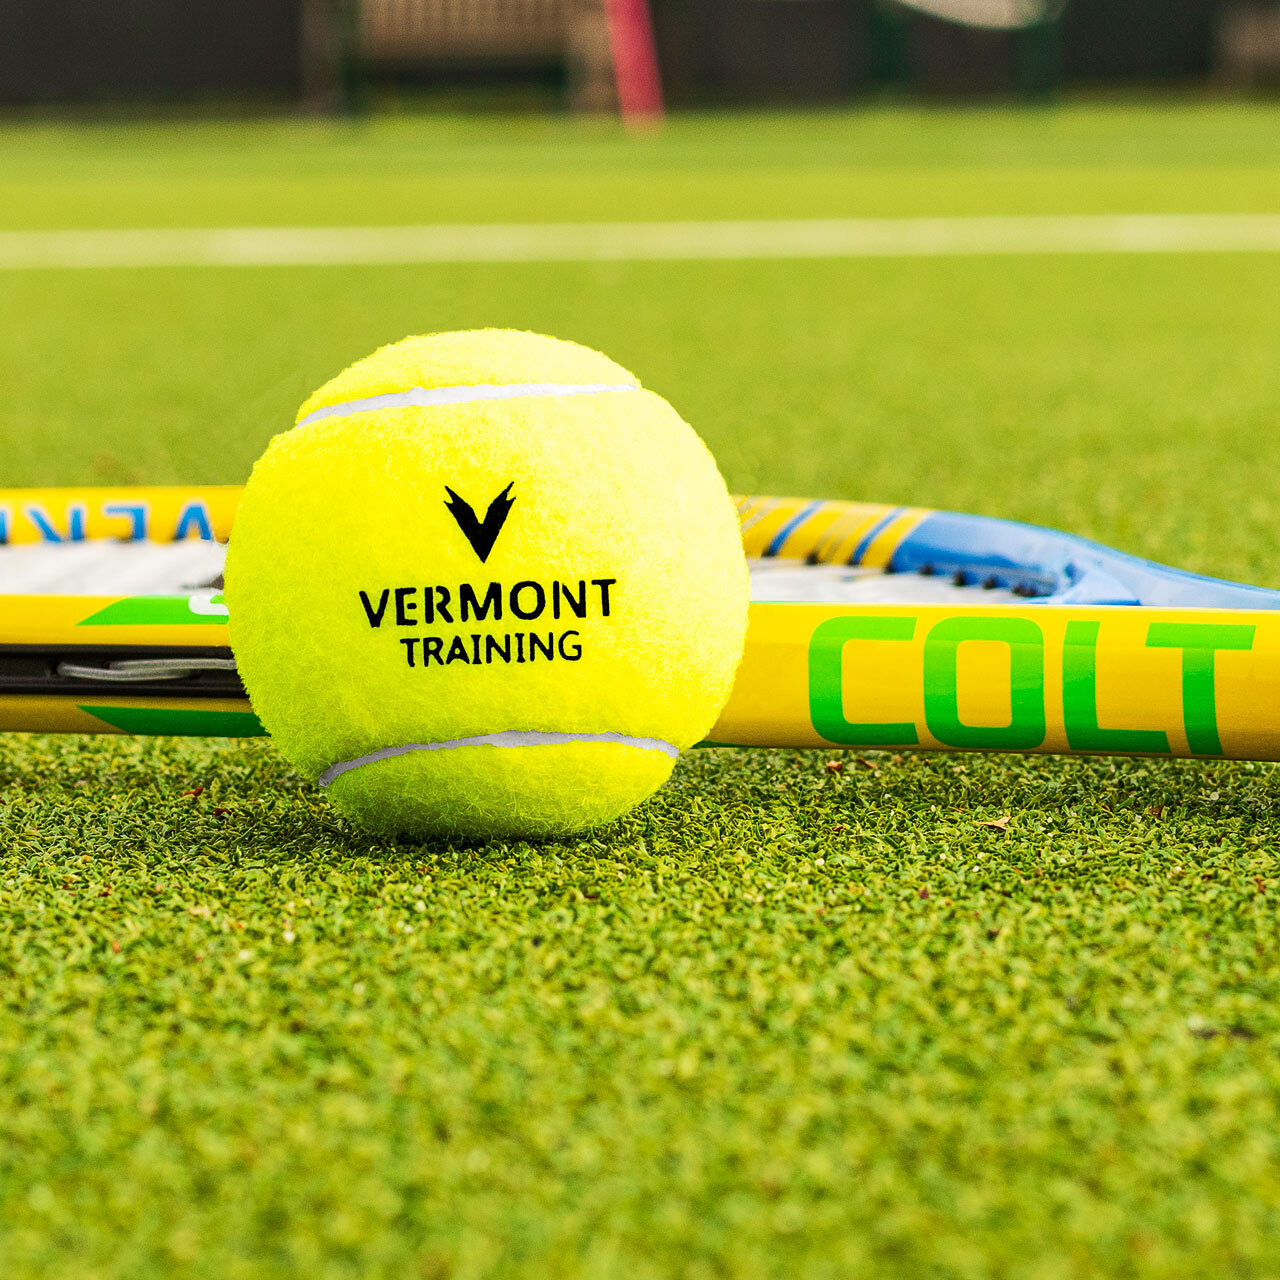 Vermont Classic Tour Tennis Balls [4 Ball Tubes]